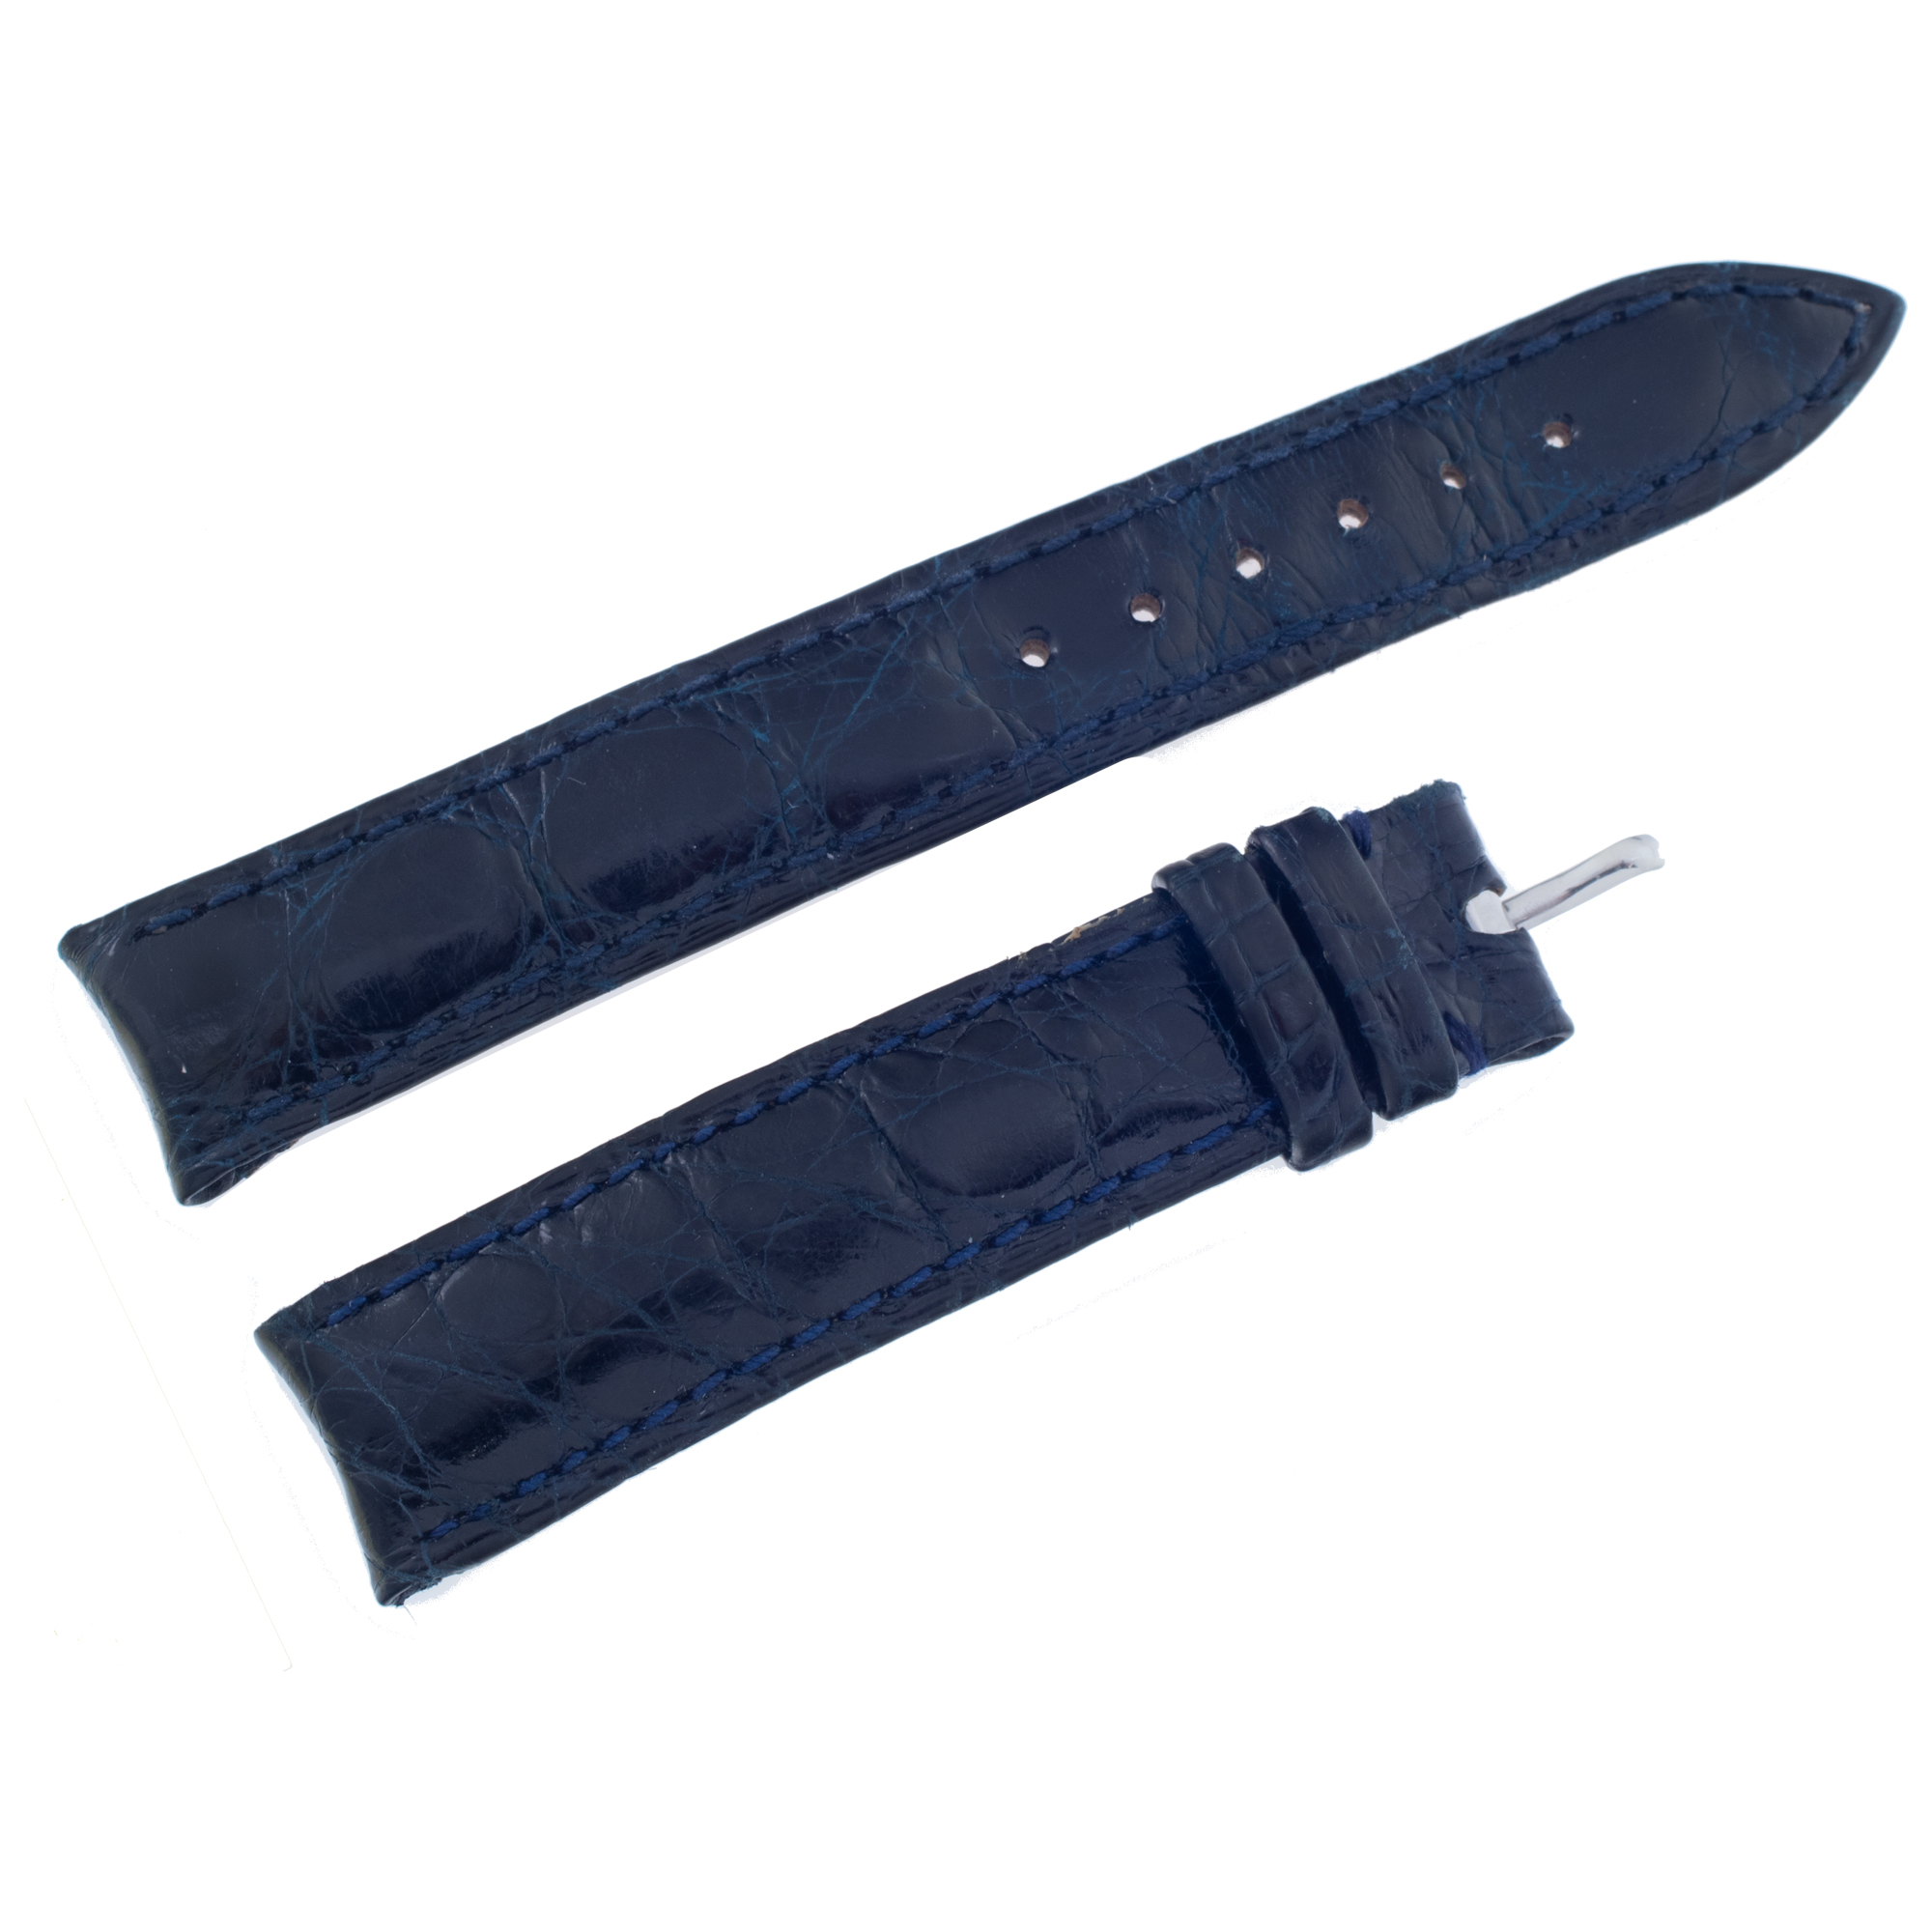 Chopard dark blue crocodile strap 15mm x 14mm for tang buckle (Default)